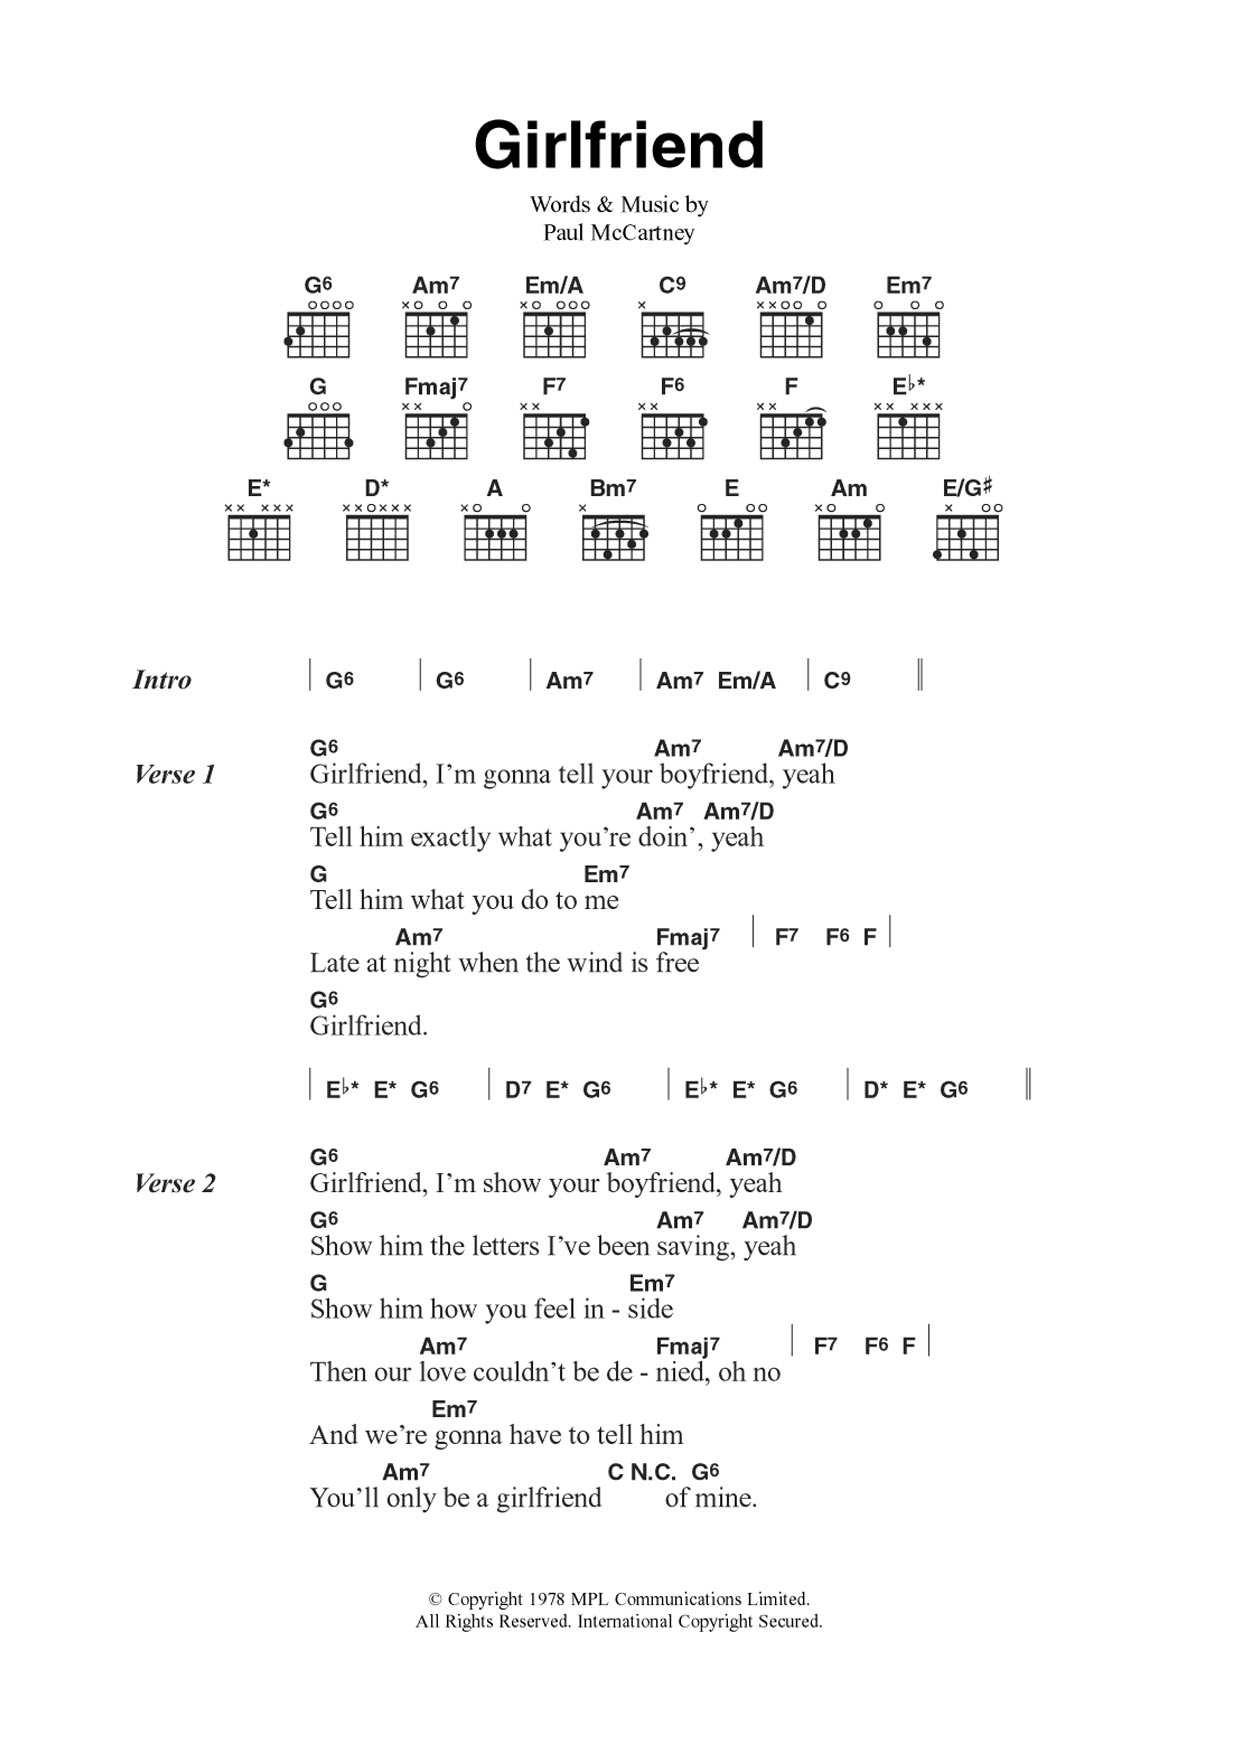 Wings Girlfriend Sheet Music Notes & Chords for Guitar Chords/Lyrics - Download or Print PDF